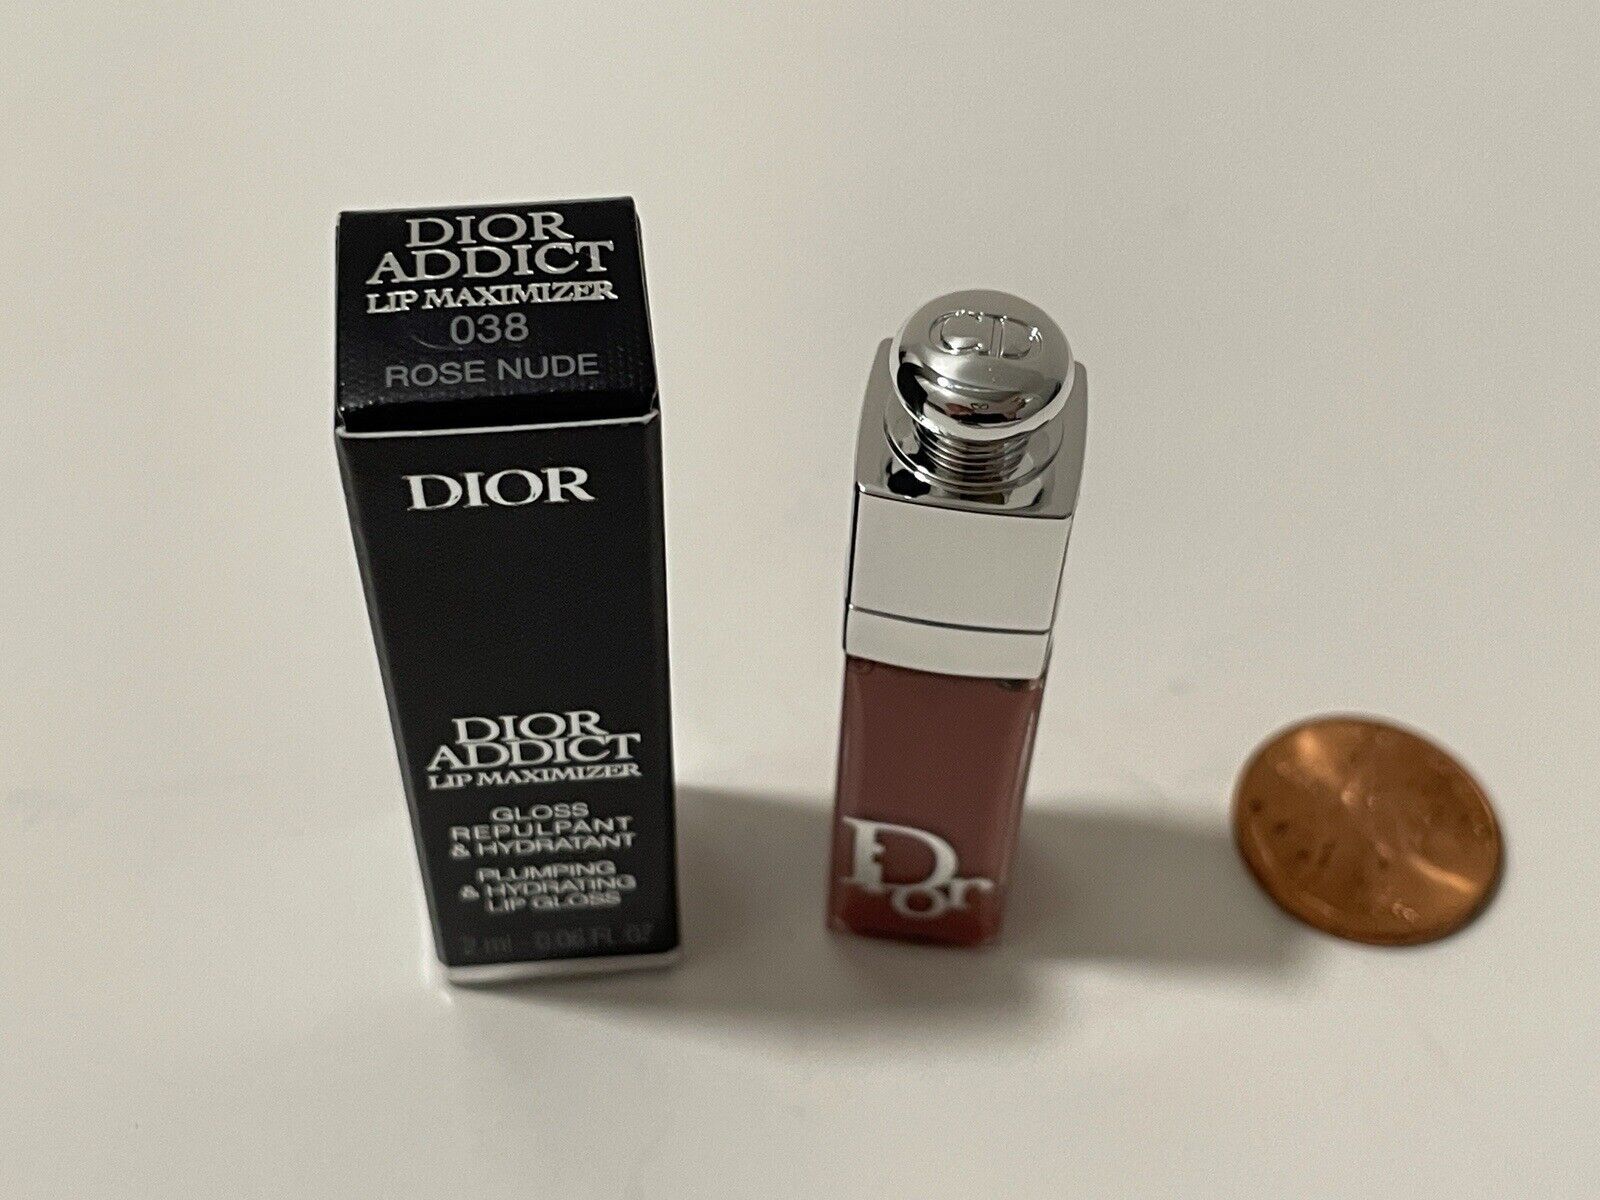 Christian Dior Dior Addict Lip Maximizer 038 Rose Nude 2mL Travel Mini - $18.00